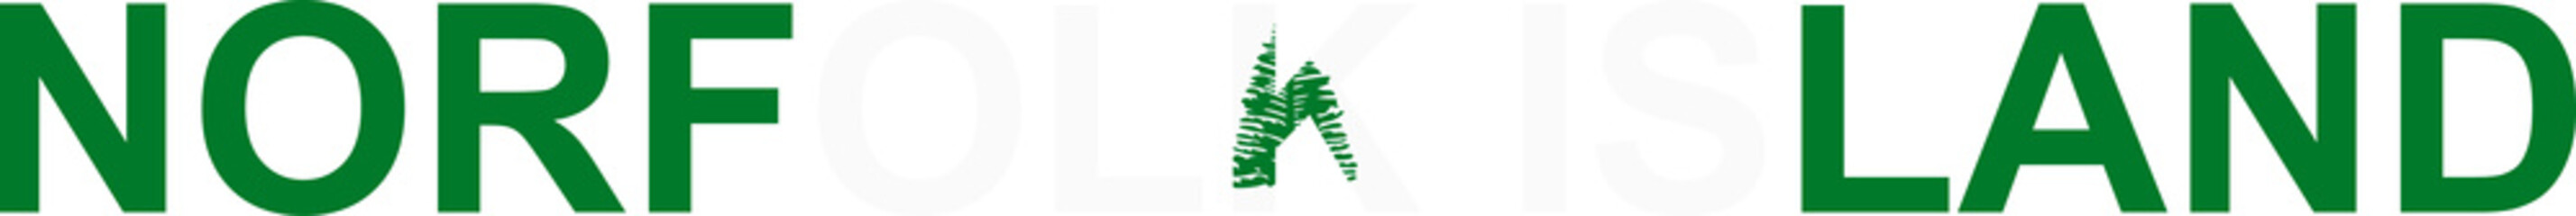 Norfolk Island word in flag style